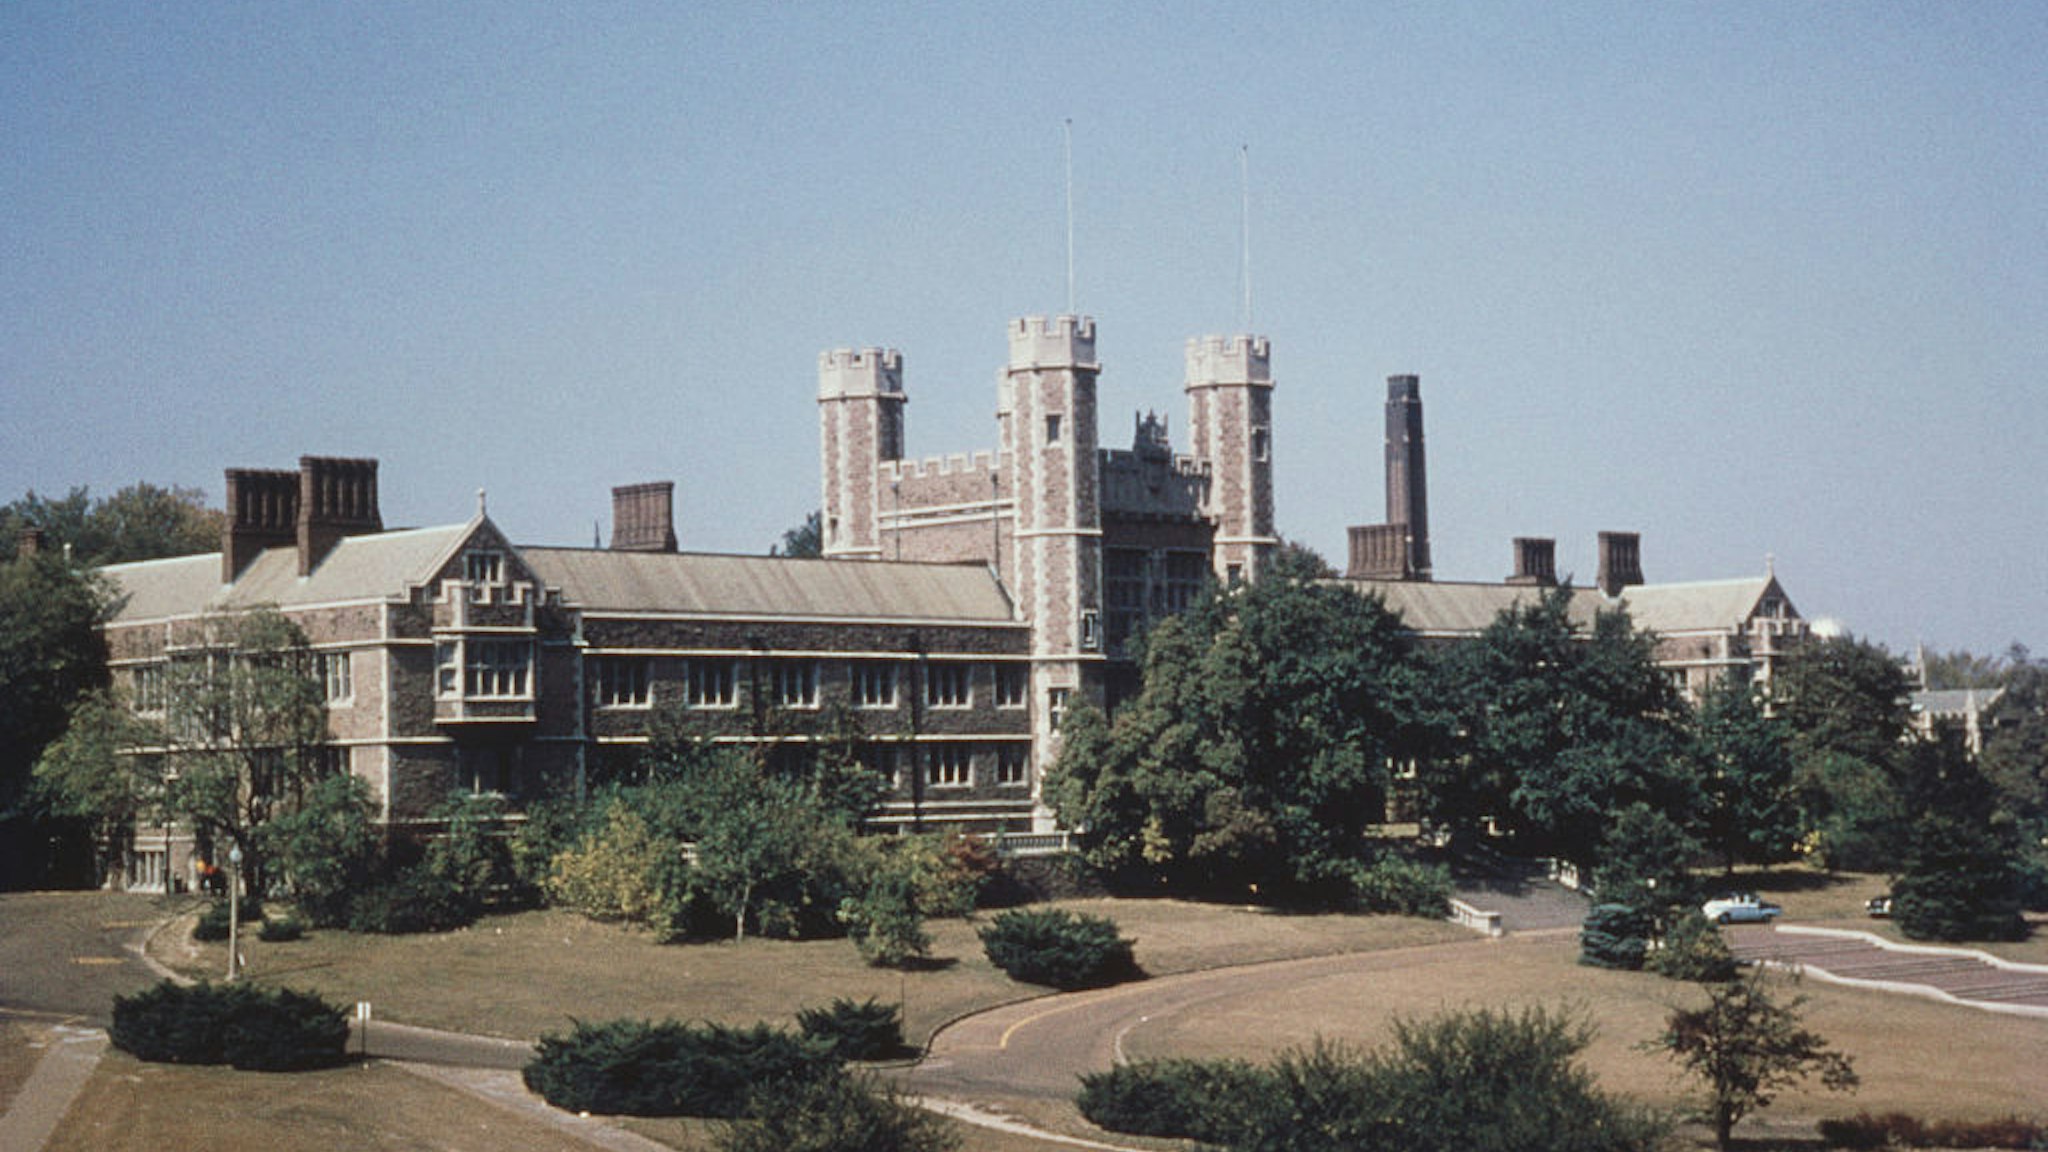 The campus of Washington University in St. Louis, Missouri, USA, circa 1960.